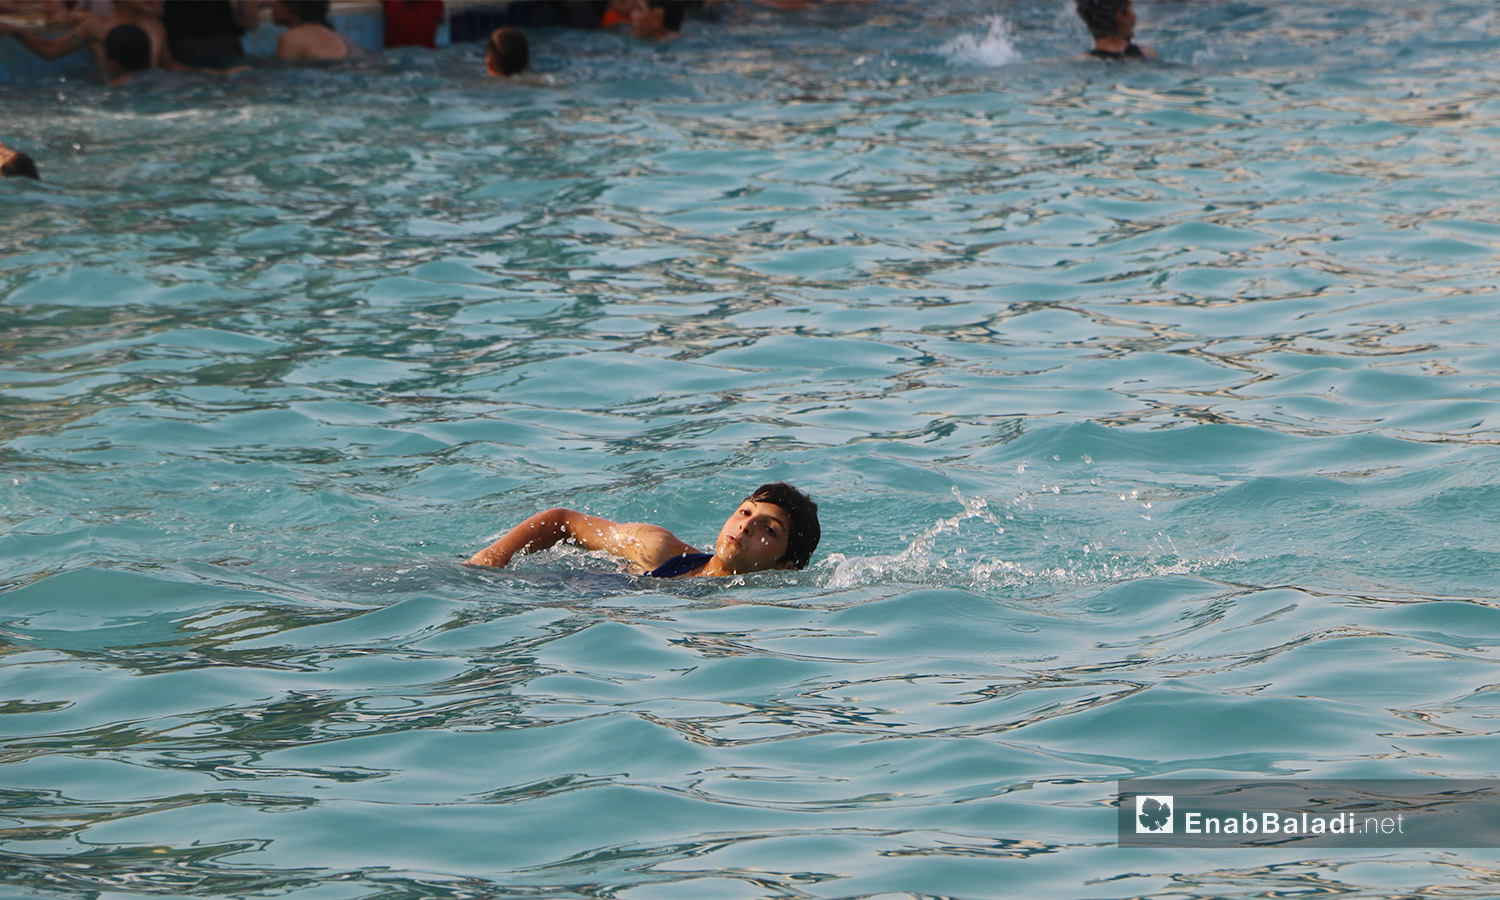 A child swimming at Idlib’s municipal swimming pool - September 2020 (Enab Baladi / Anas al-Khouli)